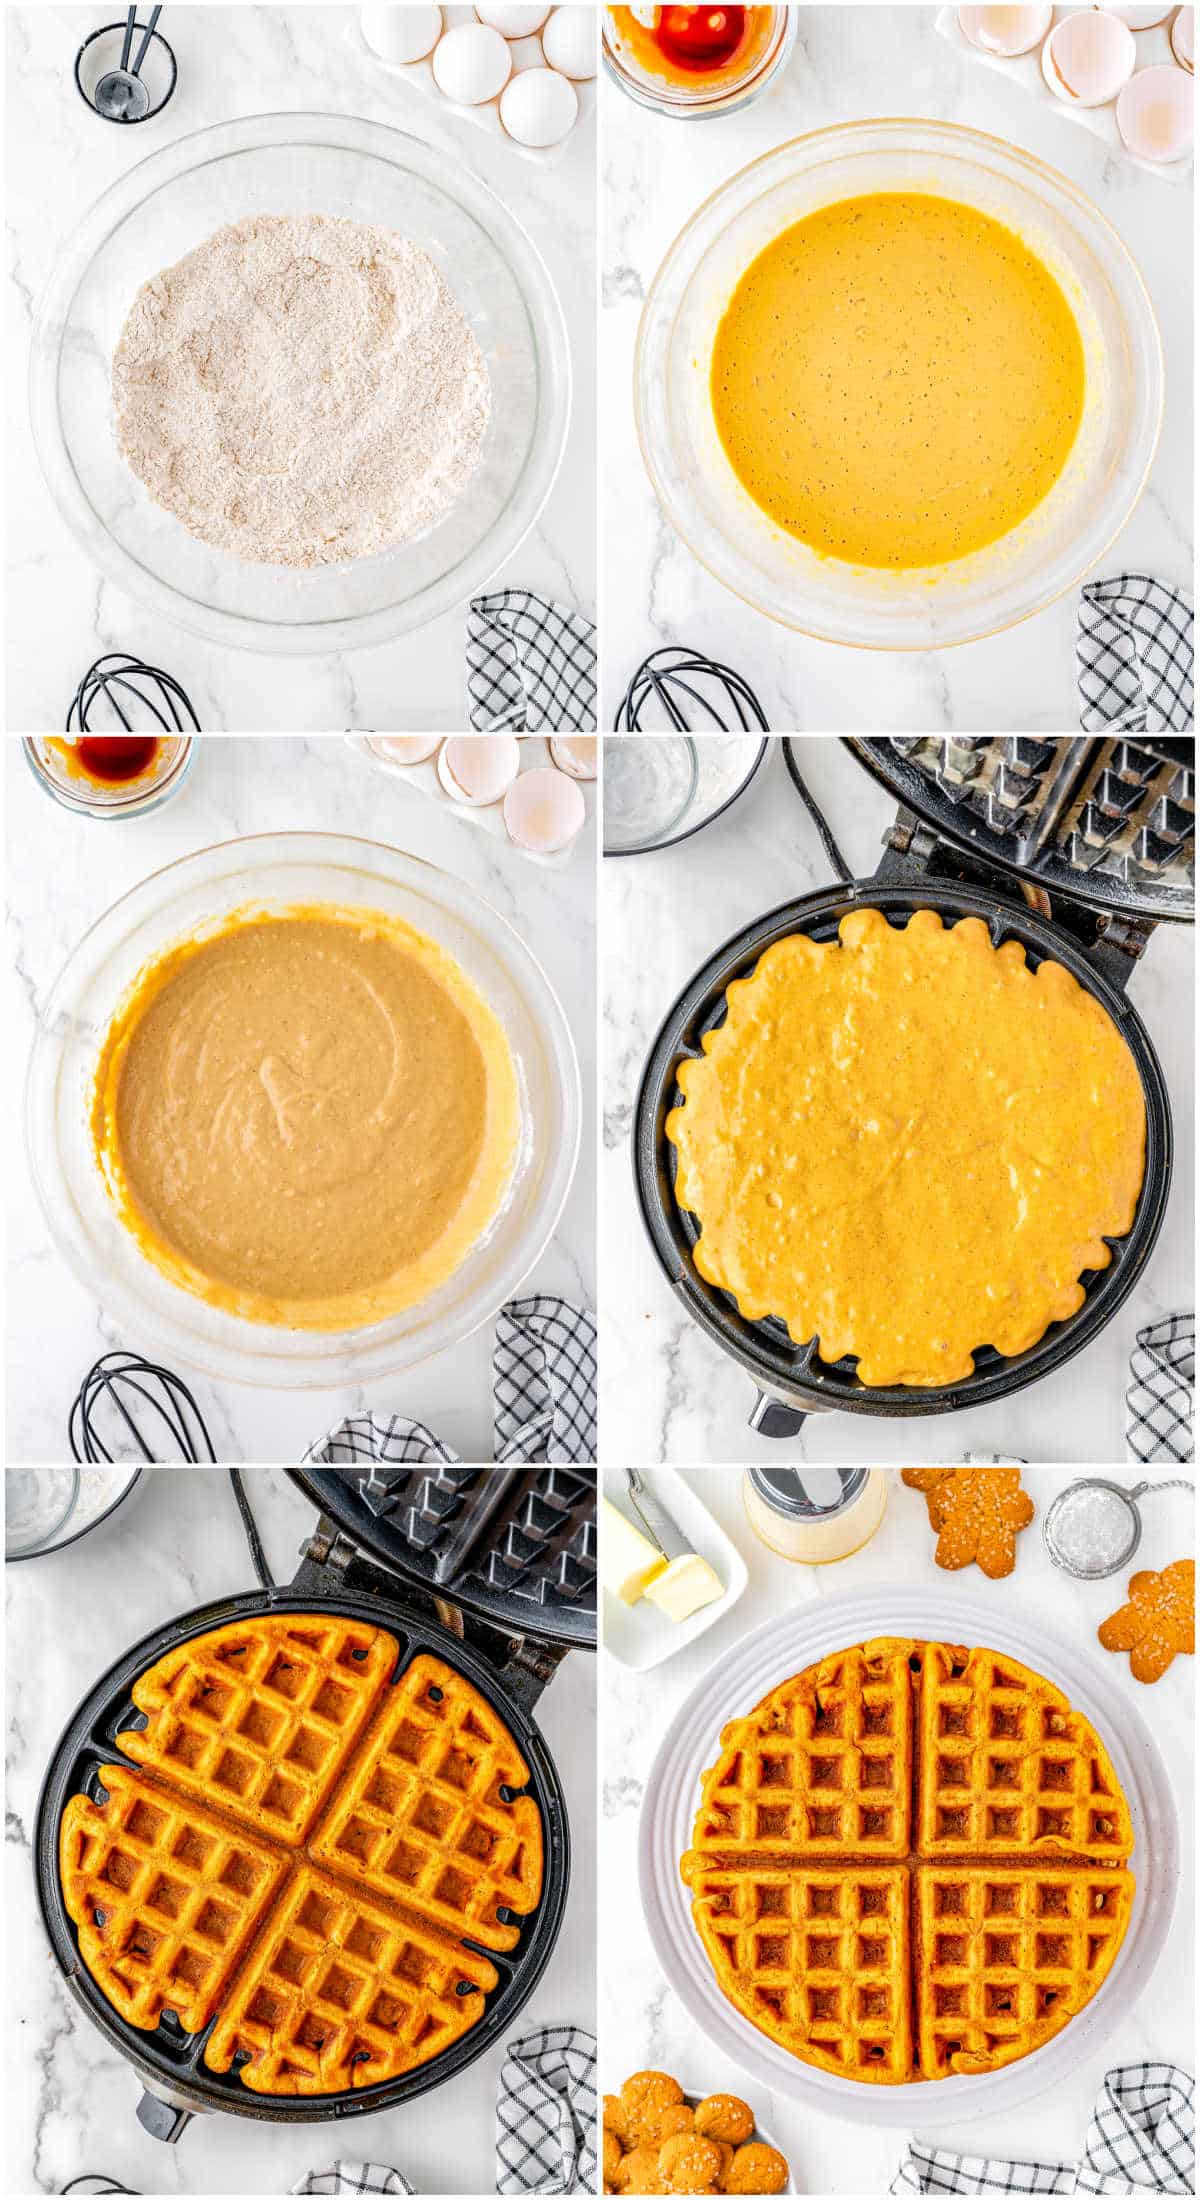 https://foodfolksandfun.net/wp-content/uploads/2017/11/How-To-Make-Gingerbread-Waffles.jpg